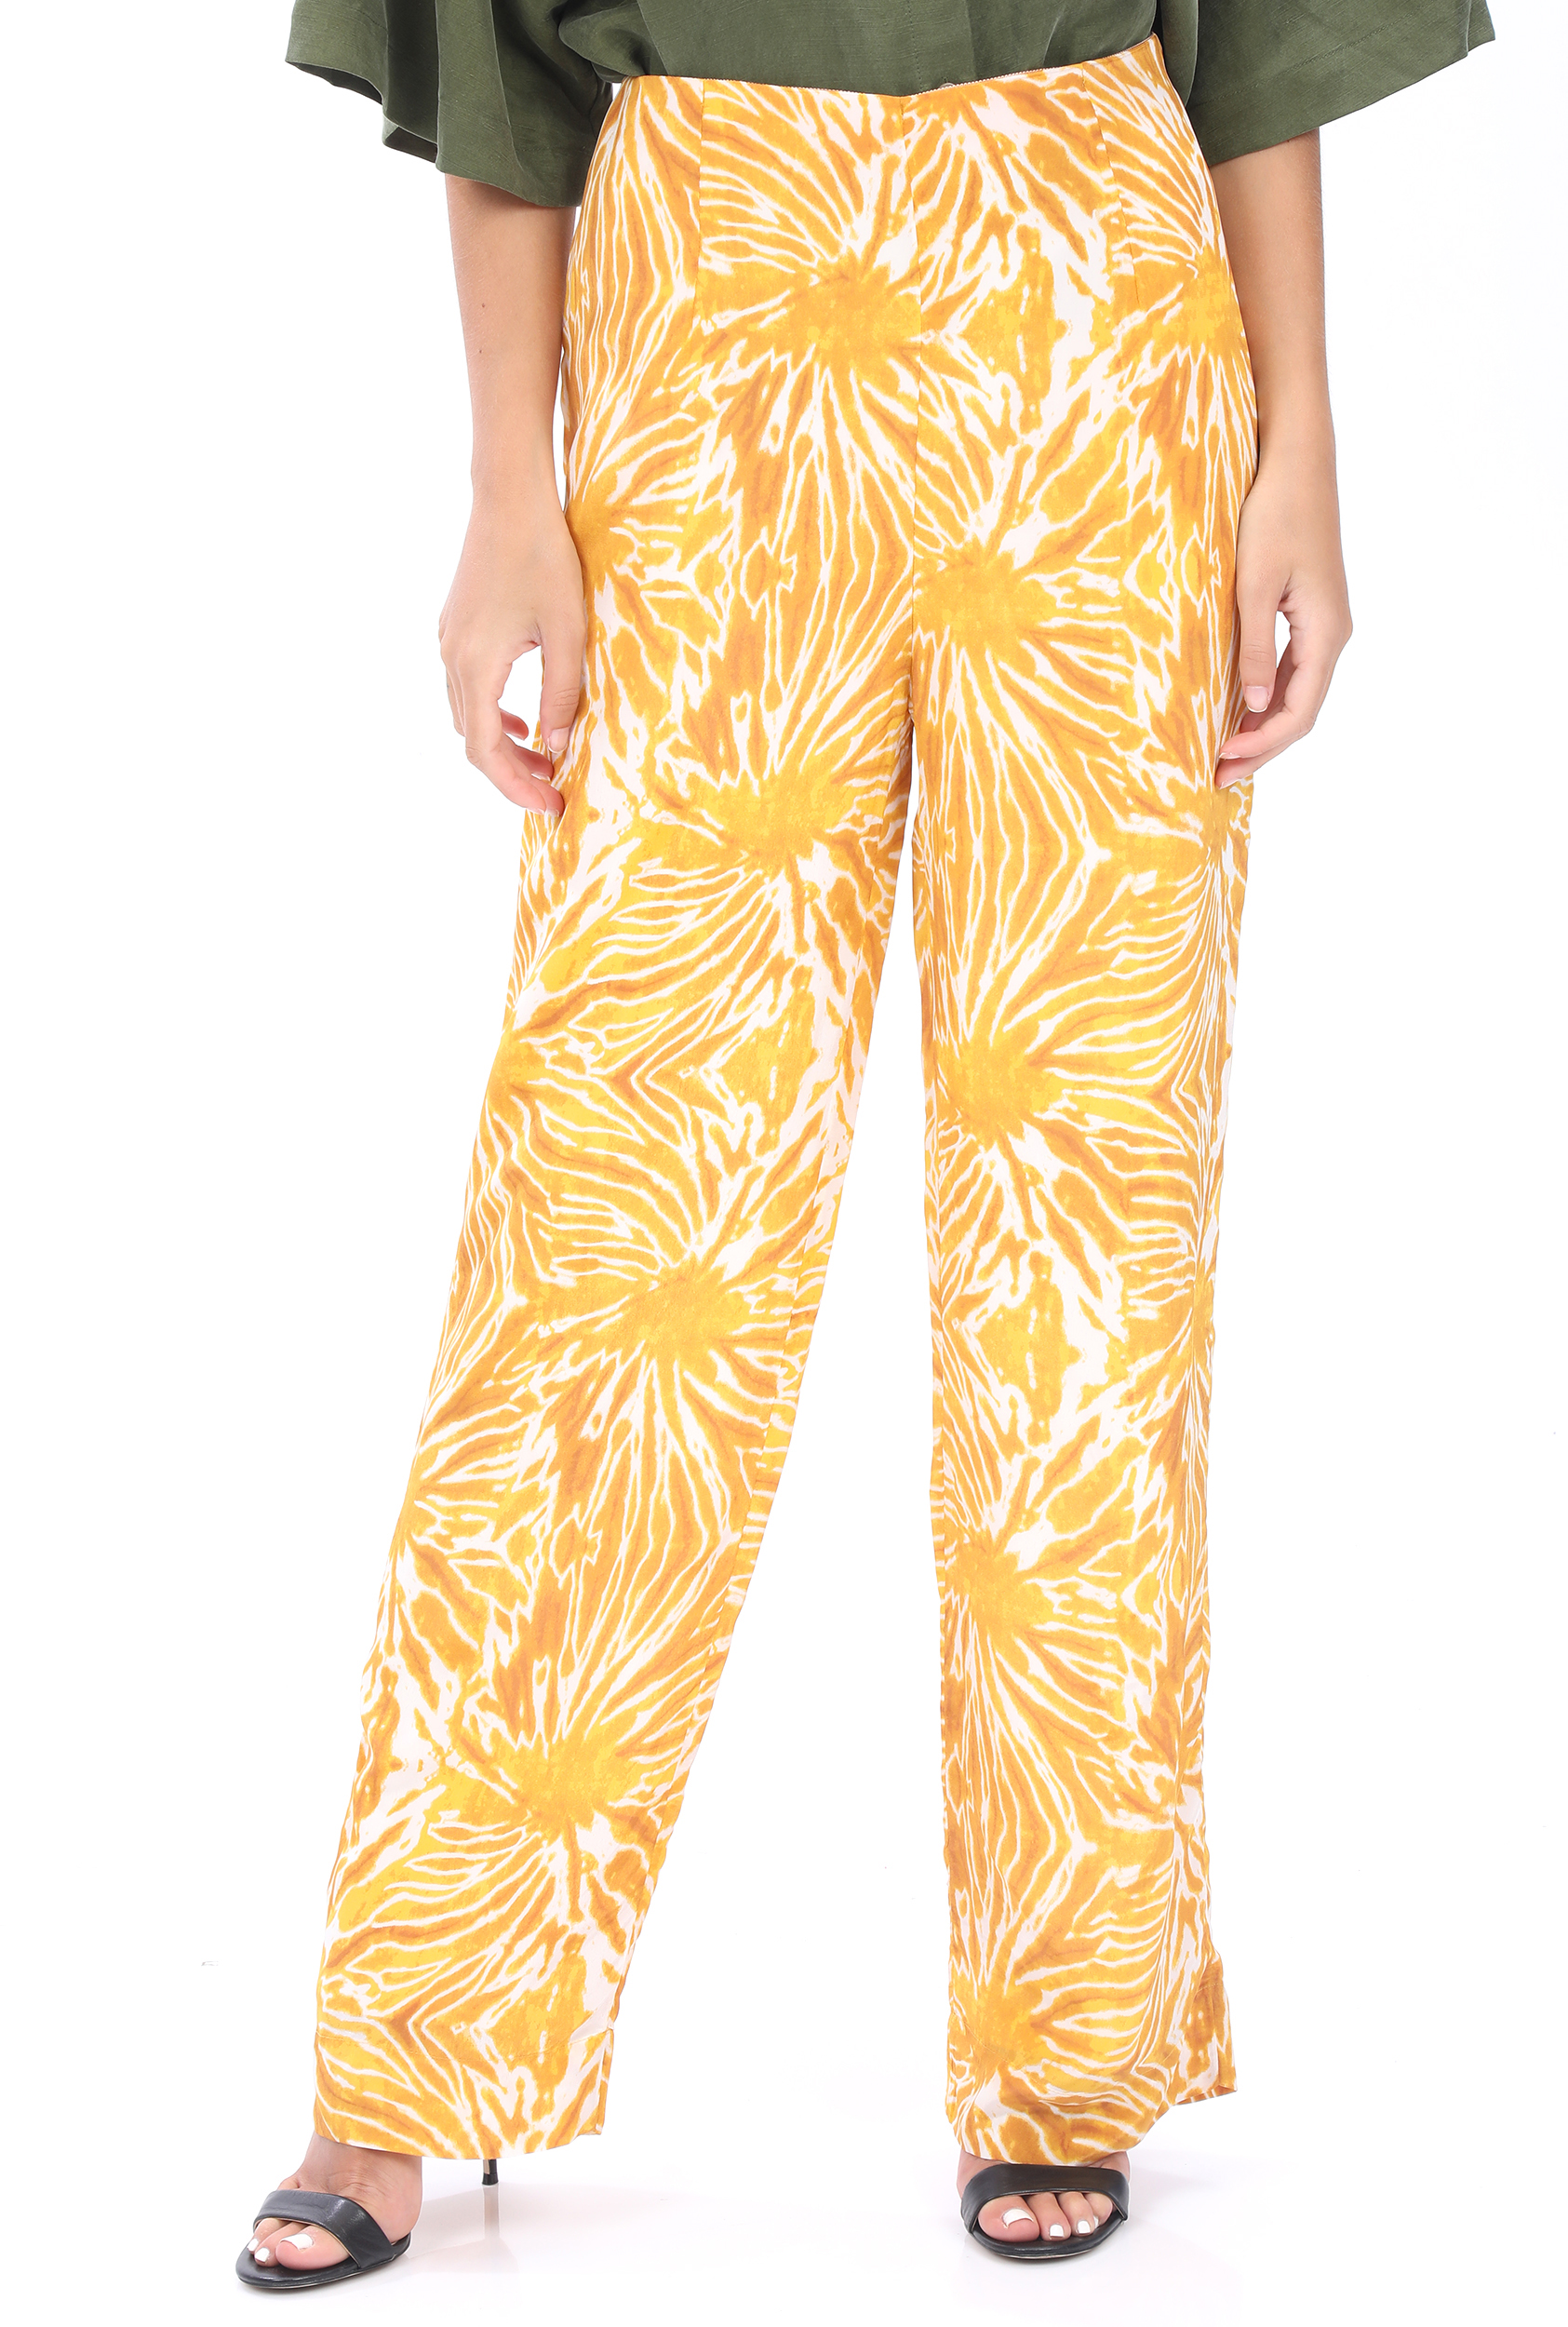 SCOTCH & SODA – Γυναικεία παντελόνα SCOTCH & SODA Printed tie-dye wide leg κίτρινη εκρού 1809223.0-0102